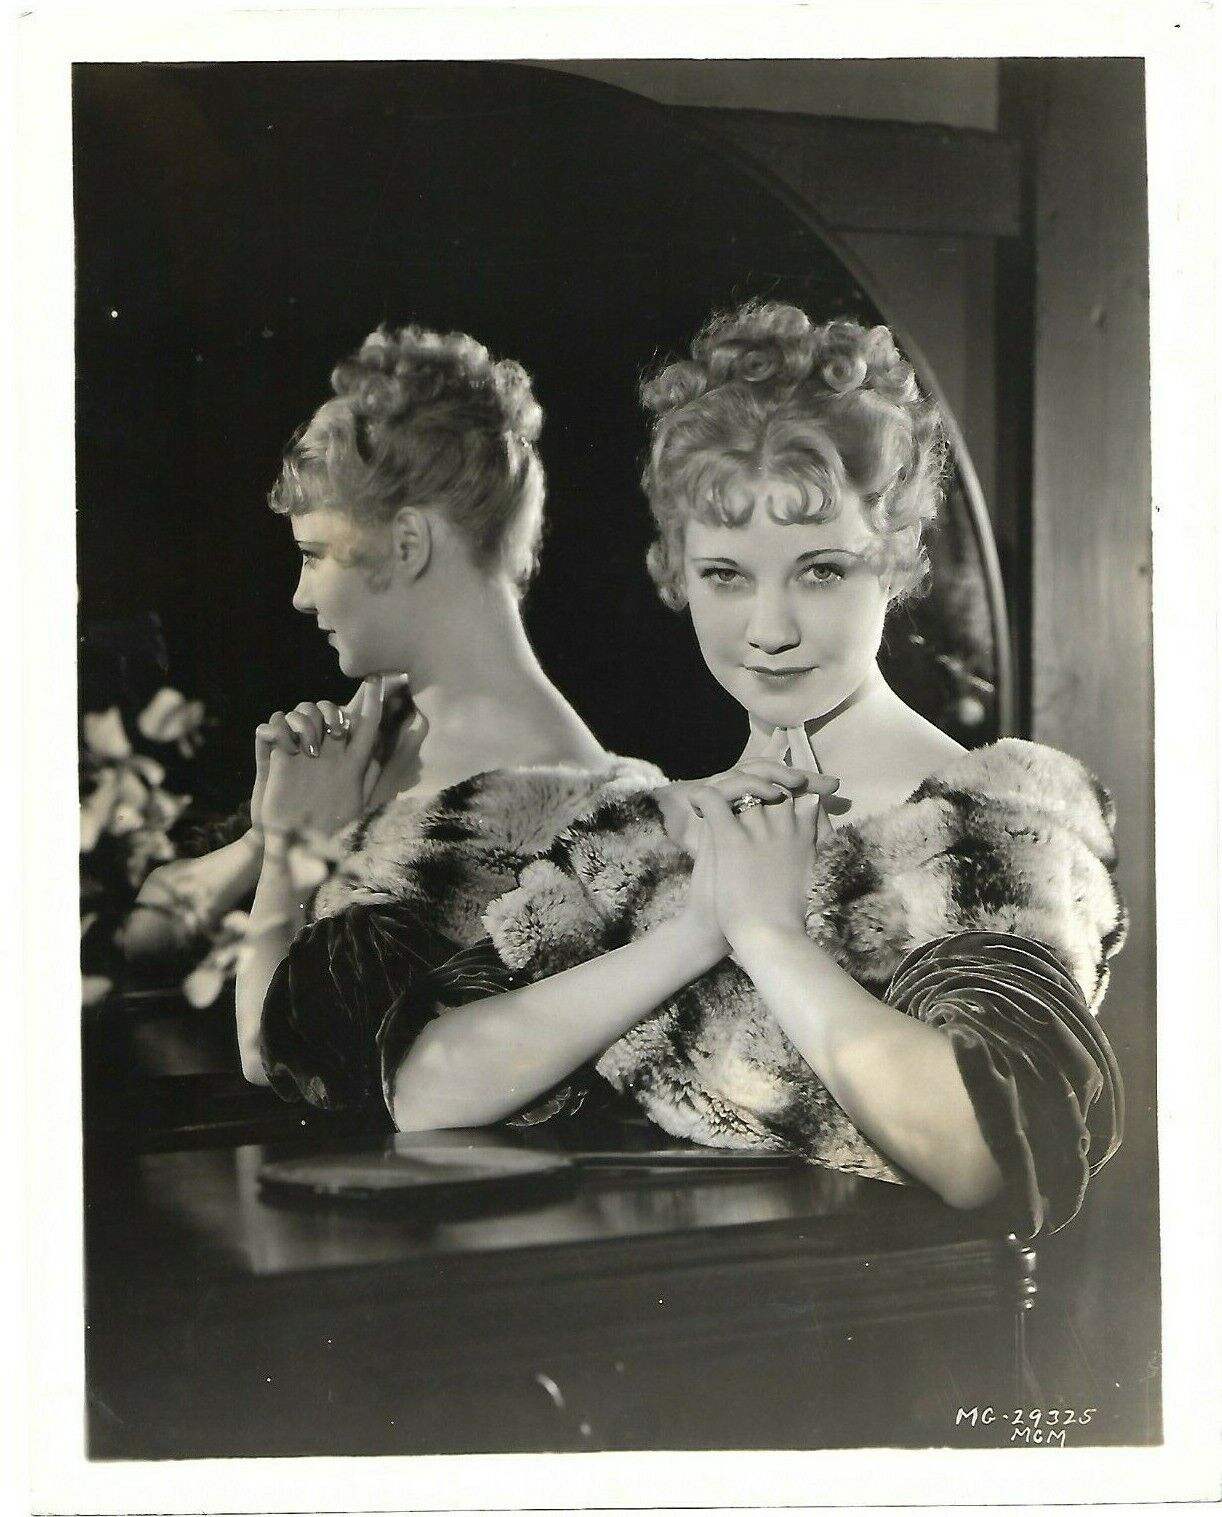 UNA MERKEL MGM SEXY LOVELY FASHION ART DECO Original 1930s PORTRAIT Photo 198